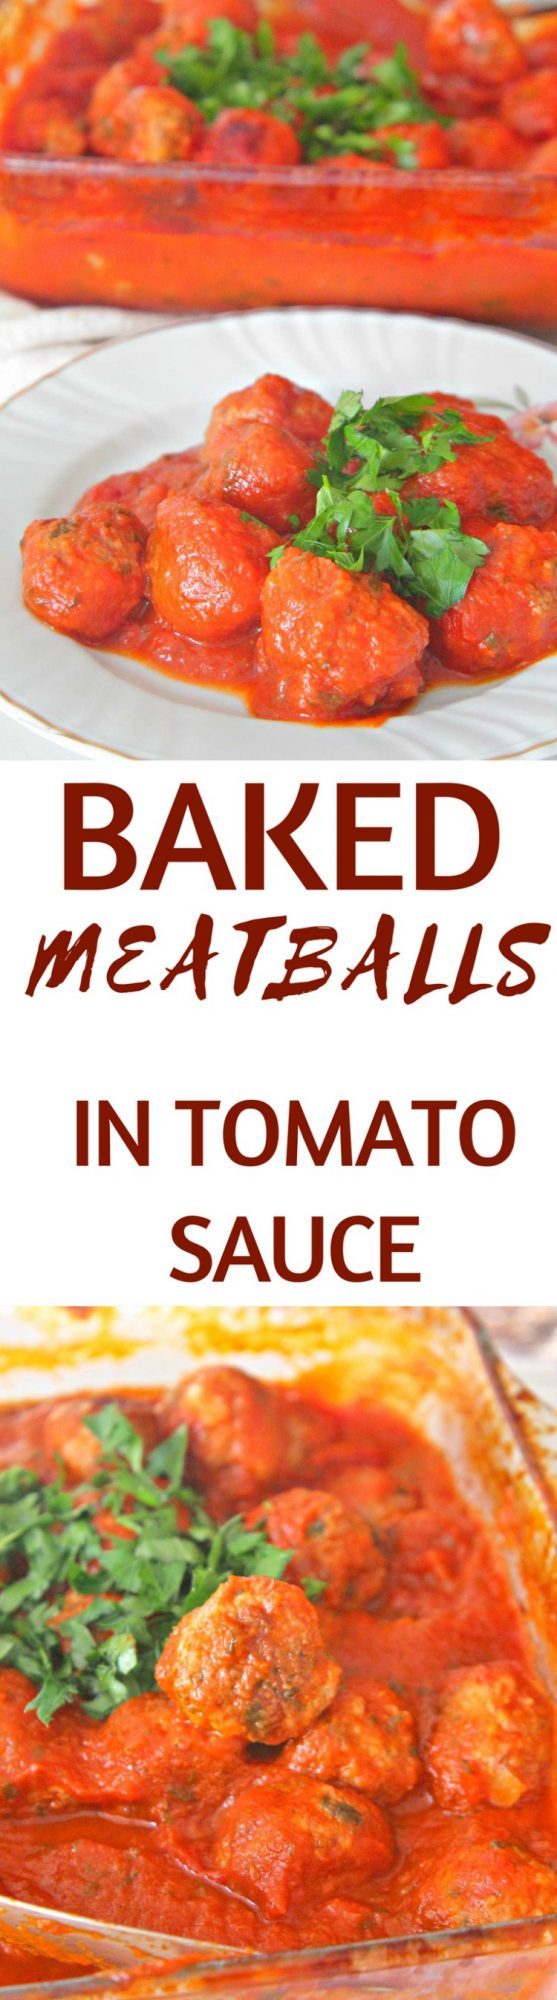 Baked meatballs in sauce